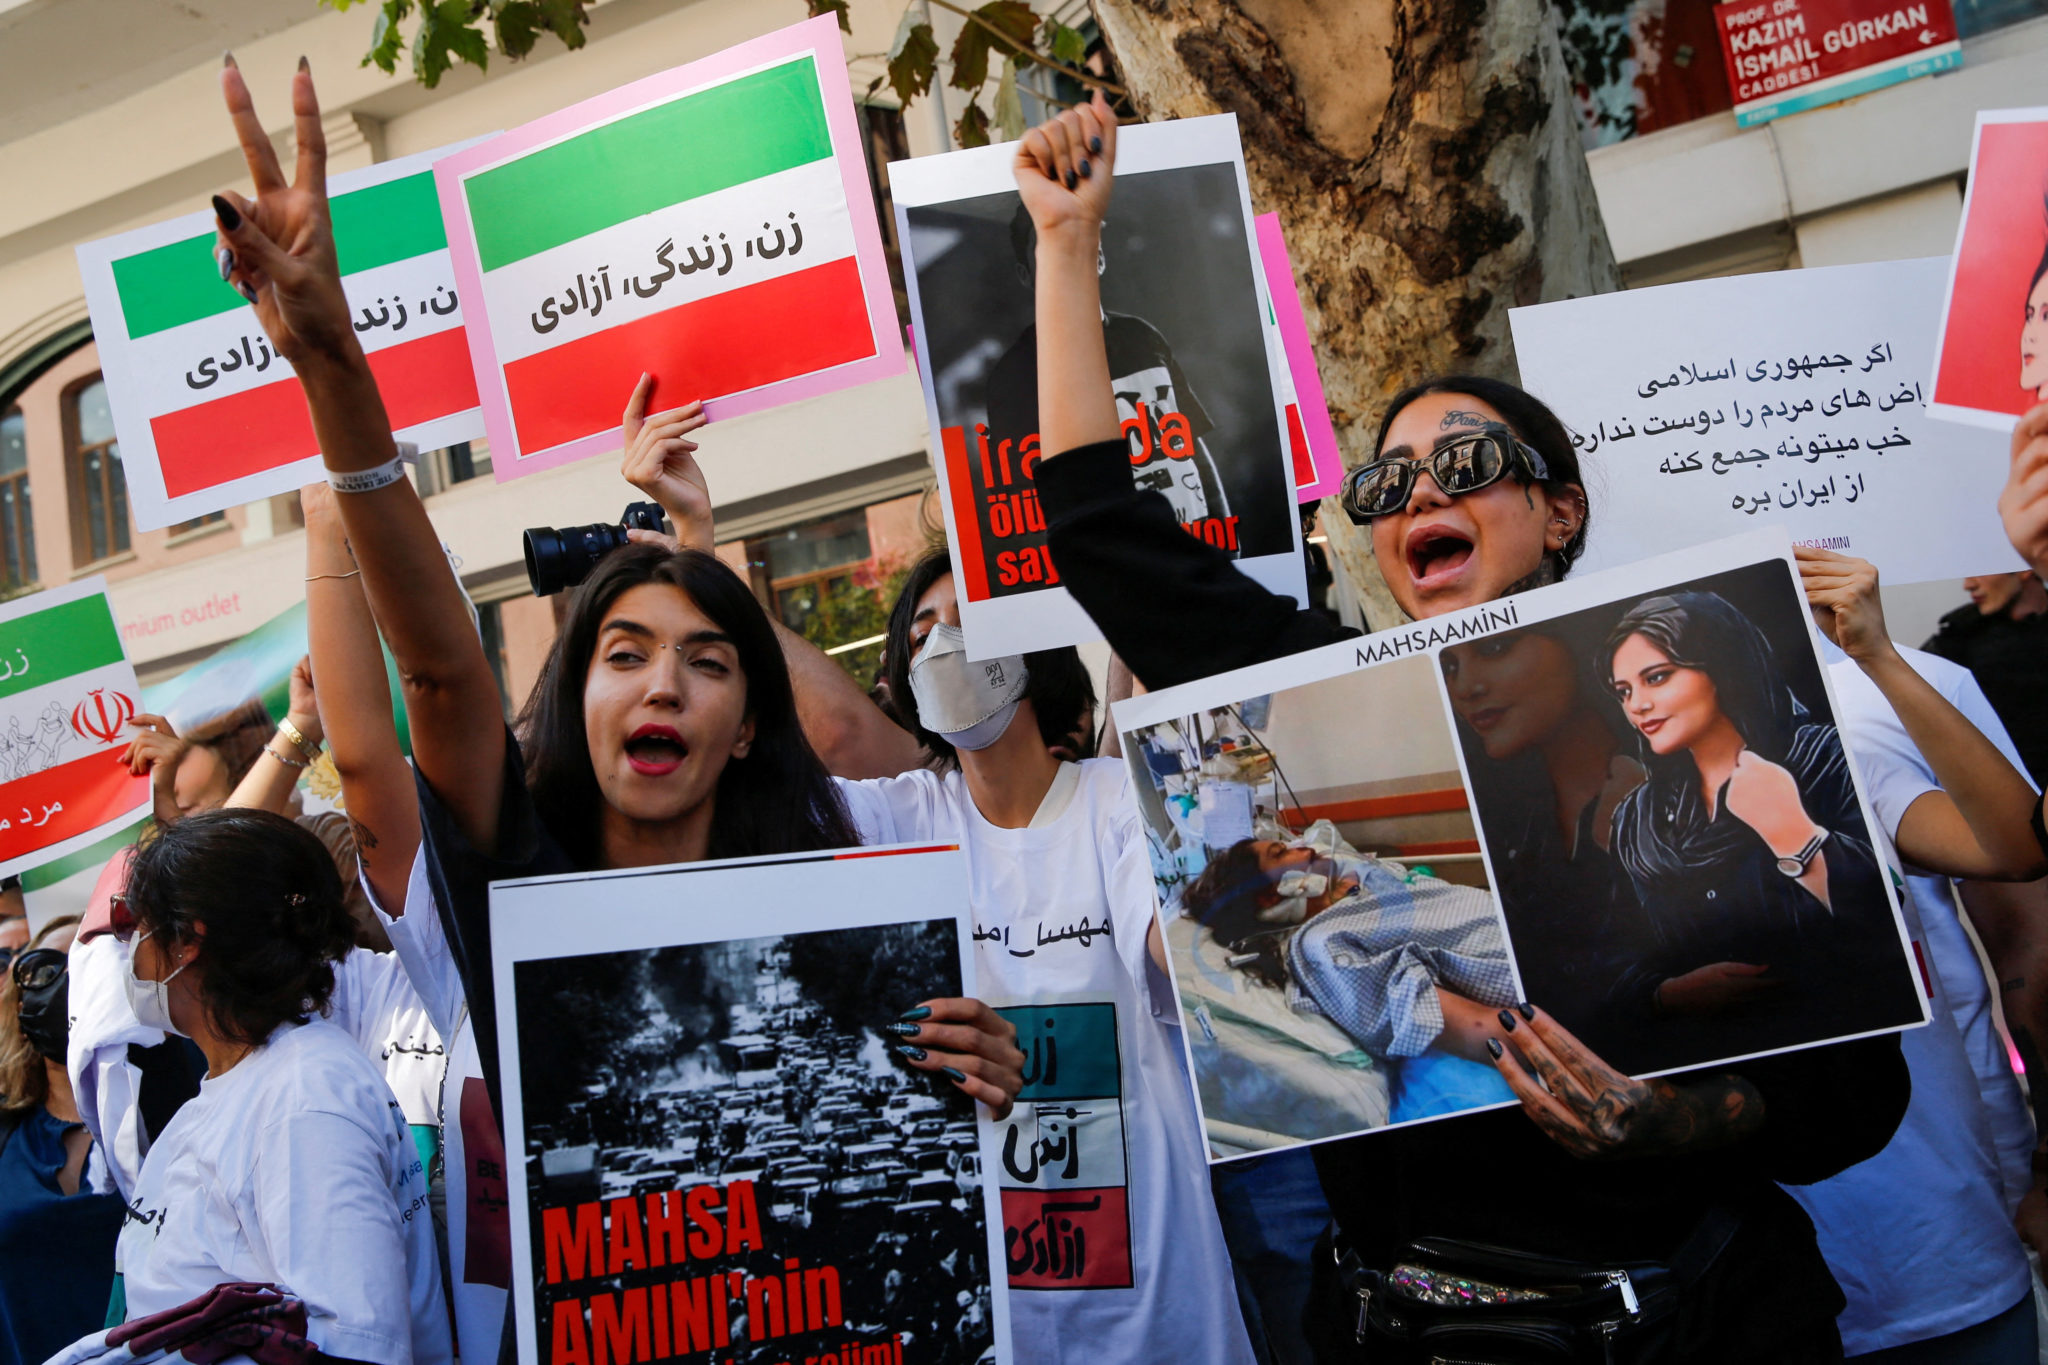 Iran protests over woman's death persist despite crackdown Inquirer News